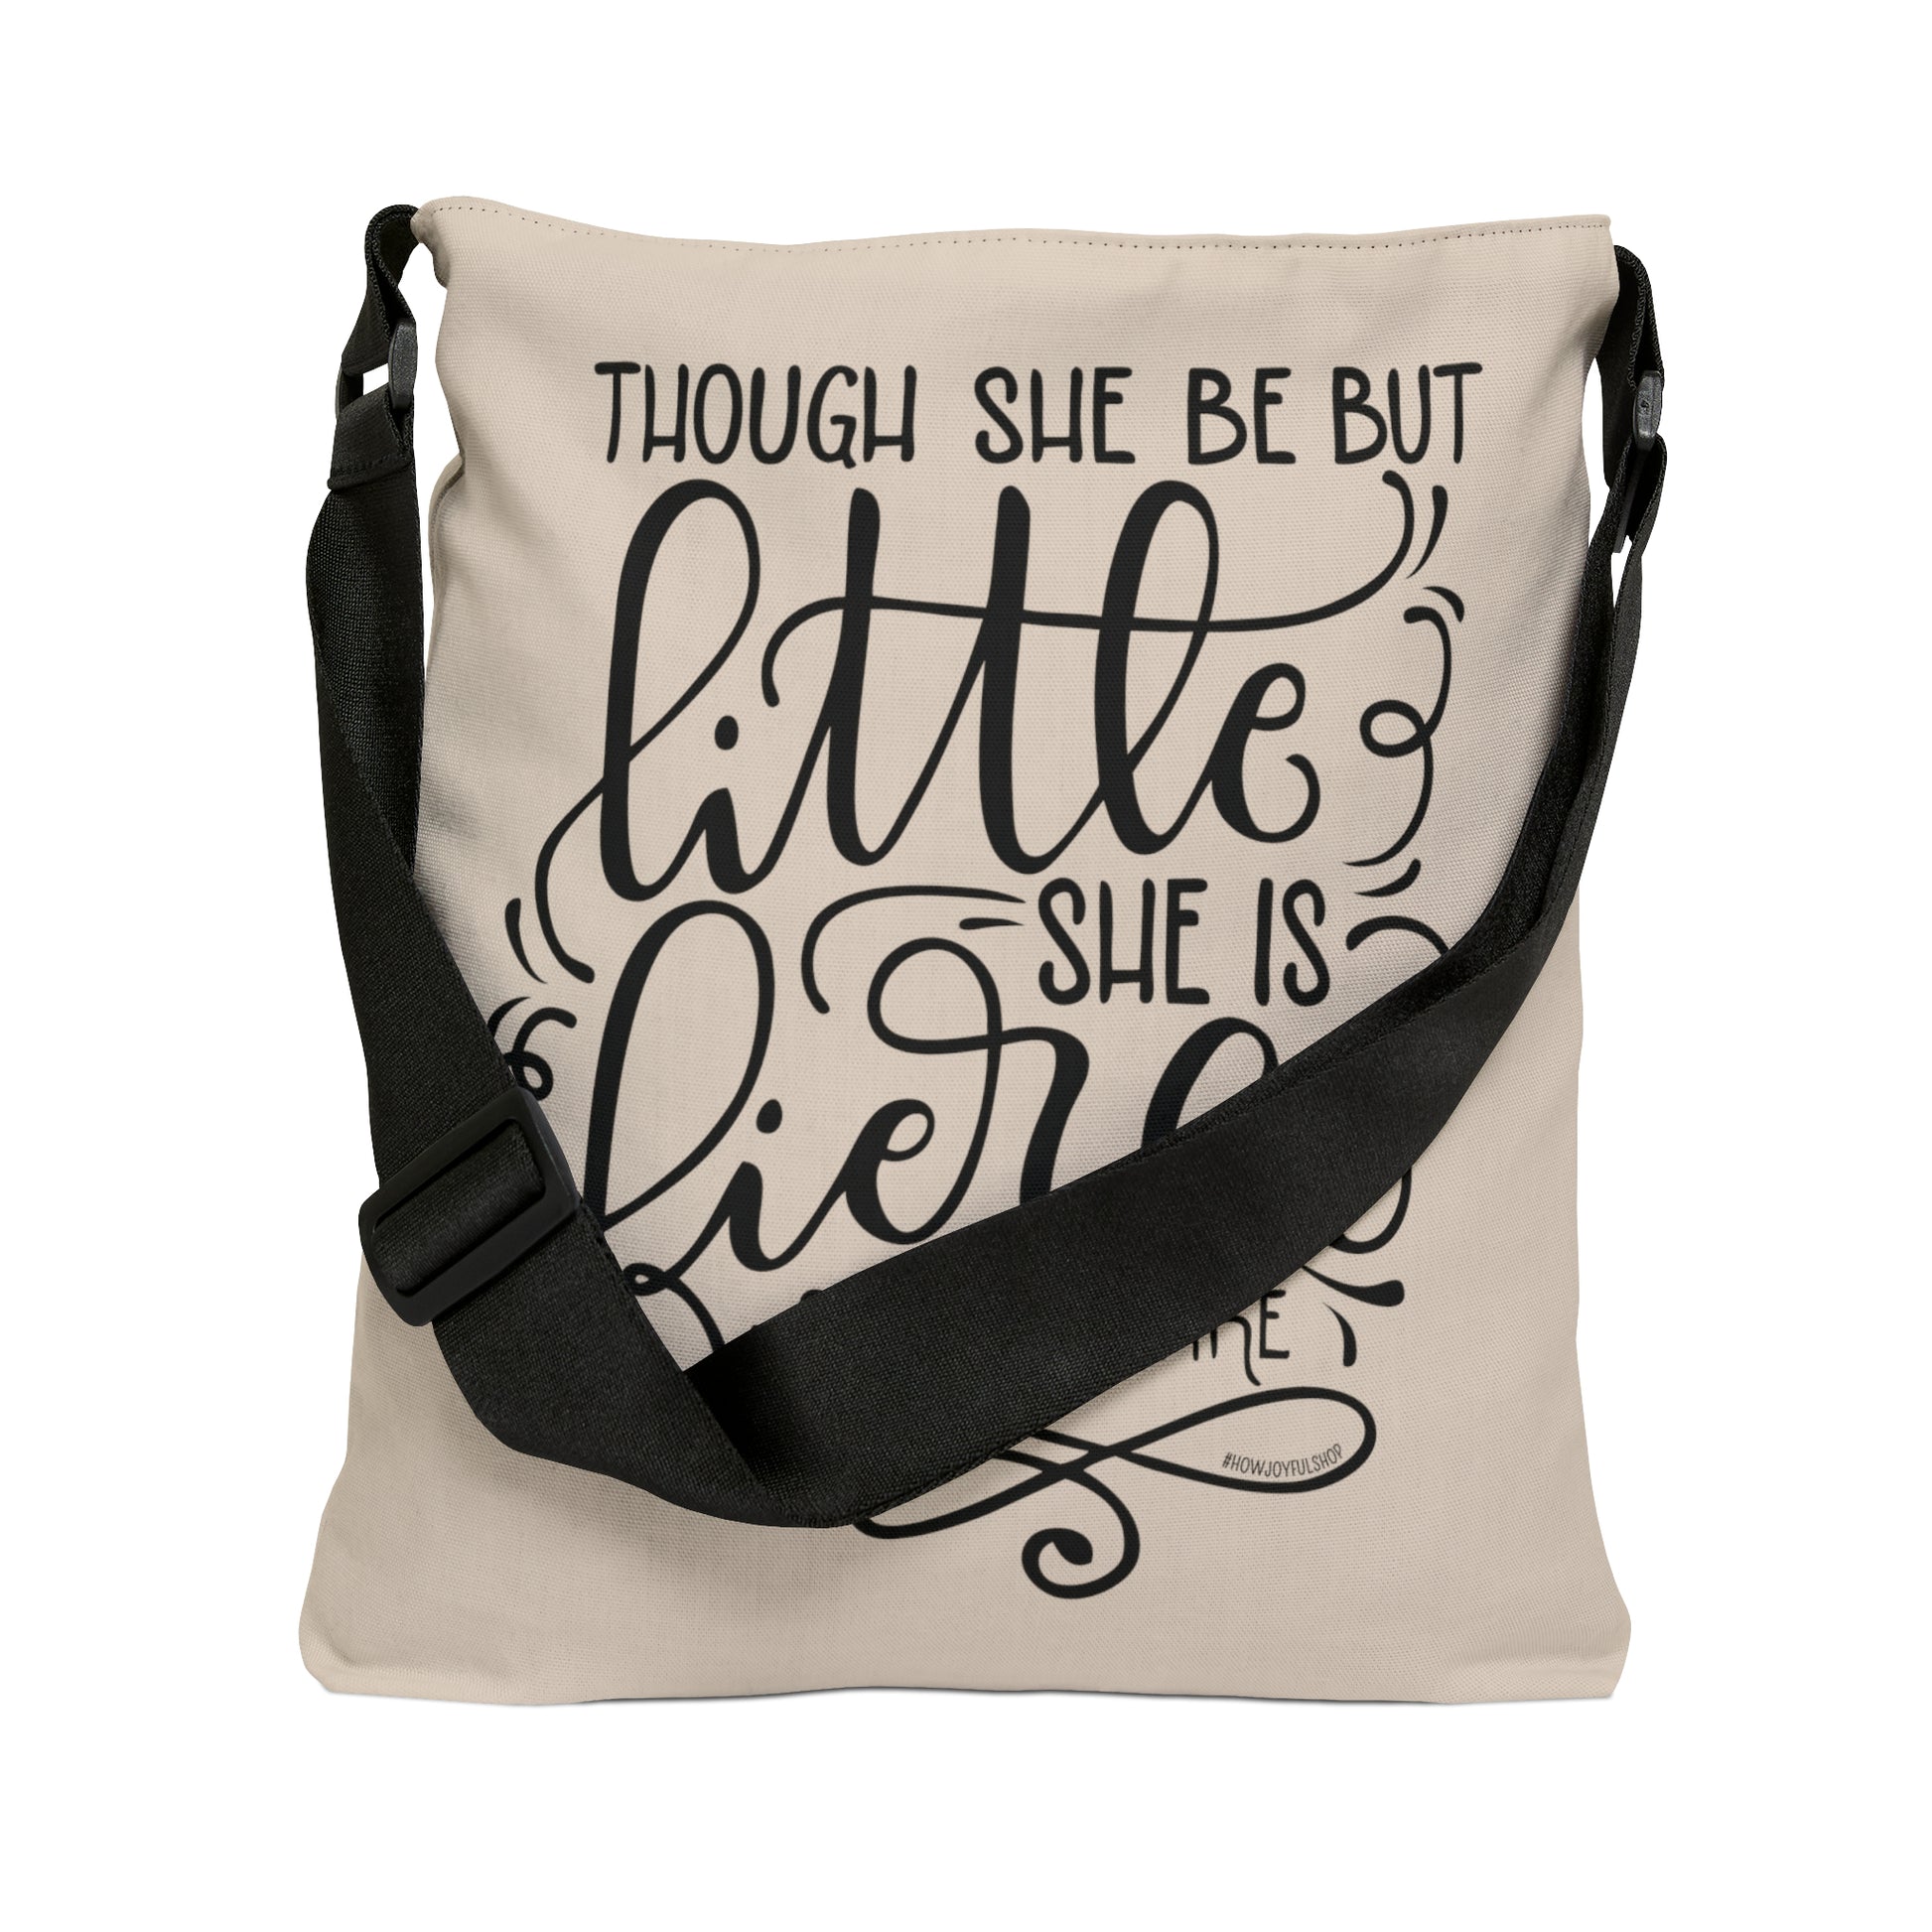 Though she be but little she is fierce - Adjustable Tote Bag - howjoyfulshop